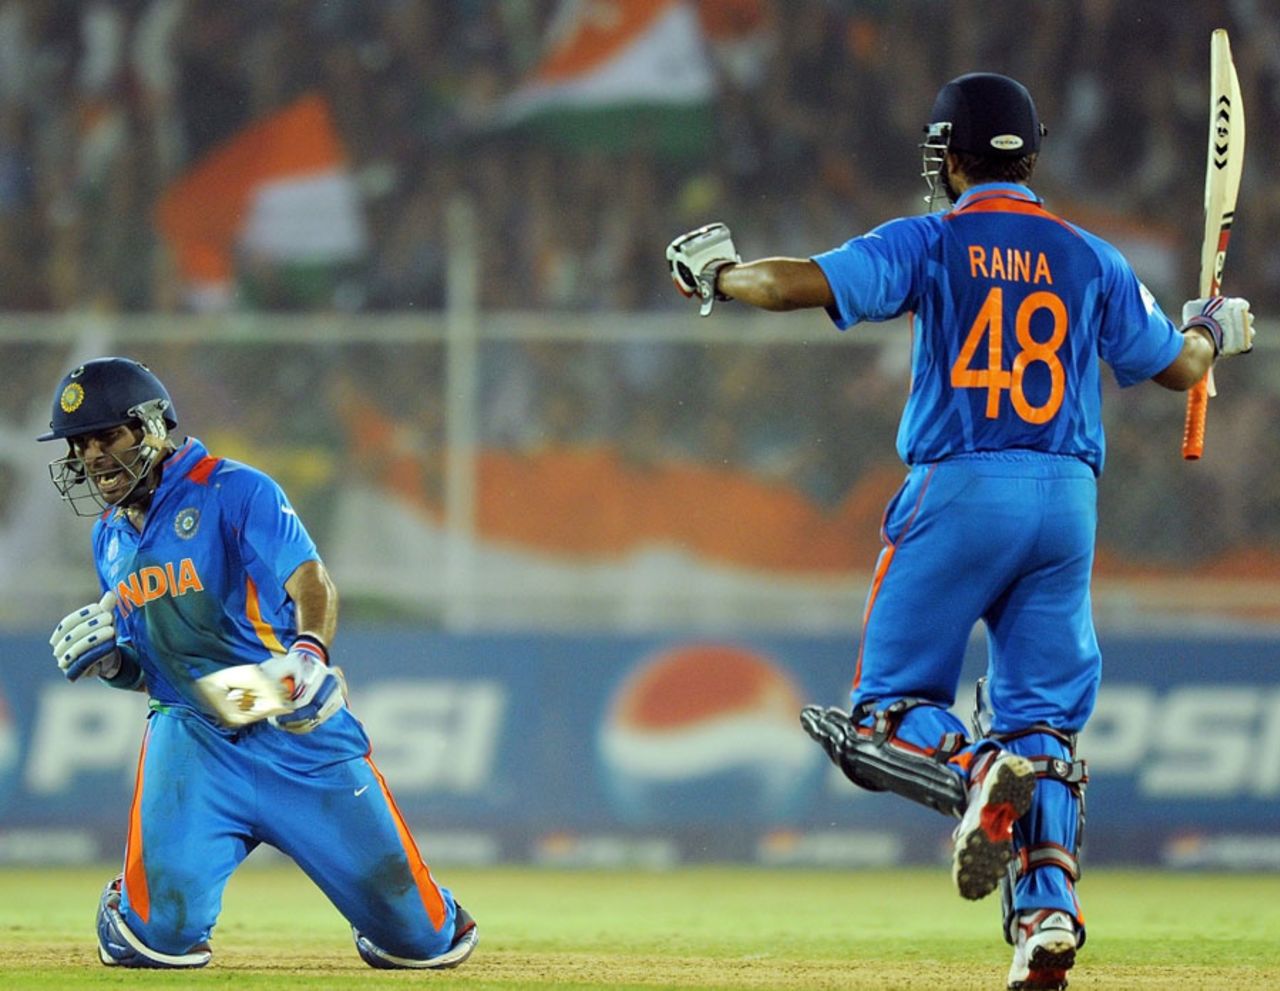 Yuvraj Singh and Suresh Raina celebrate India's win, India v Australia, 2nd quarter-final, Ahmedabad, World Cup 2011, March 24, 2011